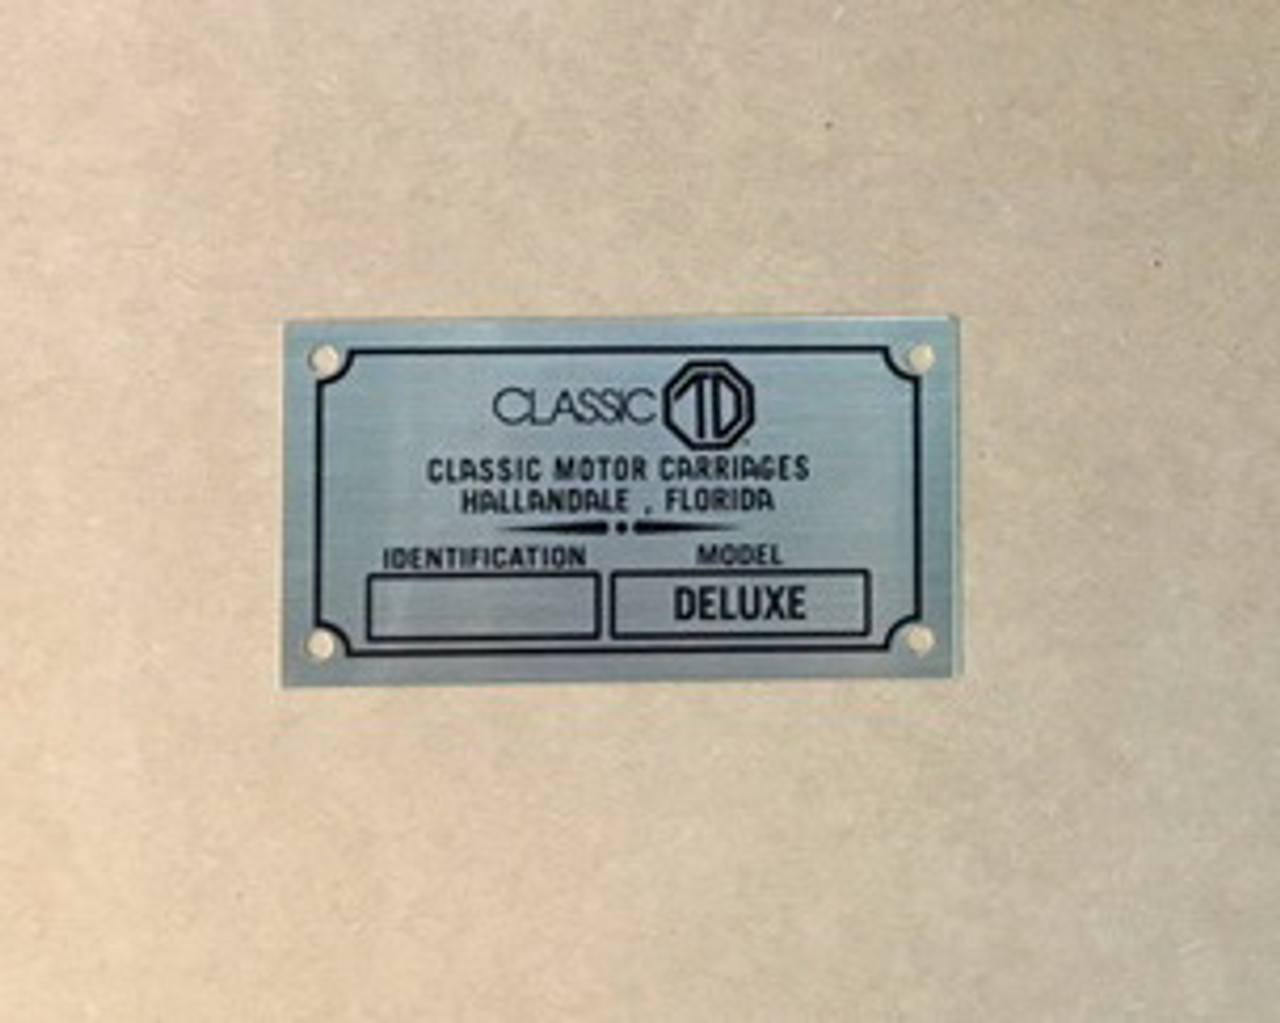 Badge, Identification Plaque "Classic Motor Carriages" Classic TD